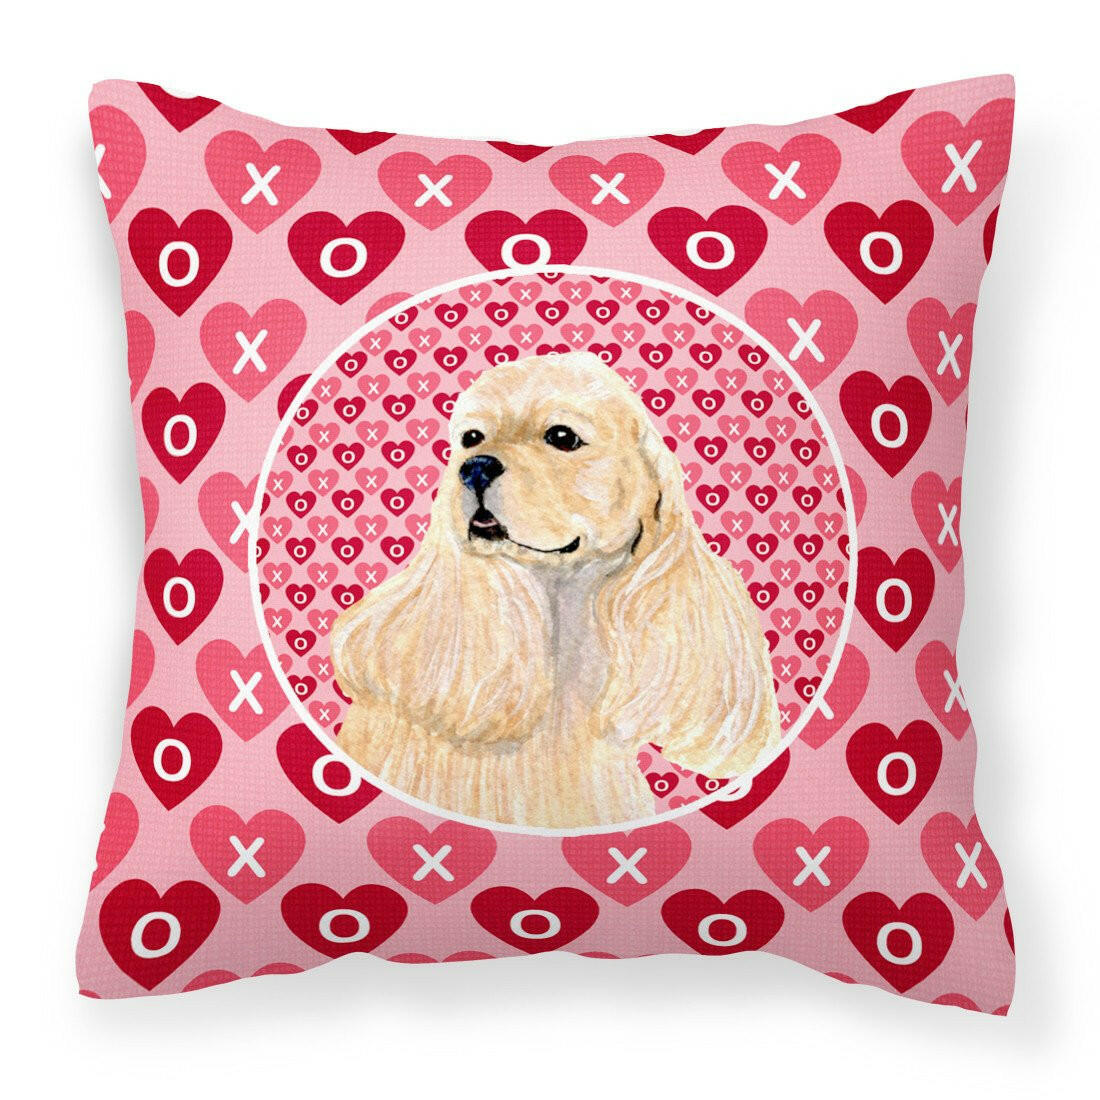 Buff Cocker Spaniel Hearts Love Valentine's Day Fabric Decorative Pillow SS4522PW1414 by Caroline's Treasures